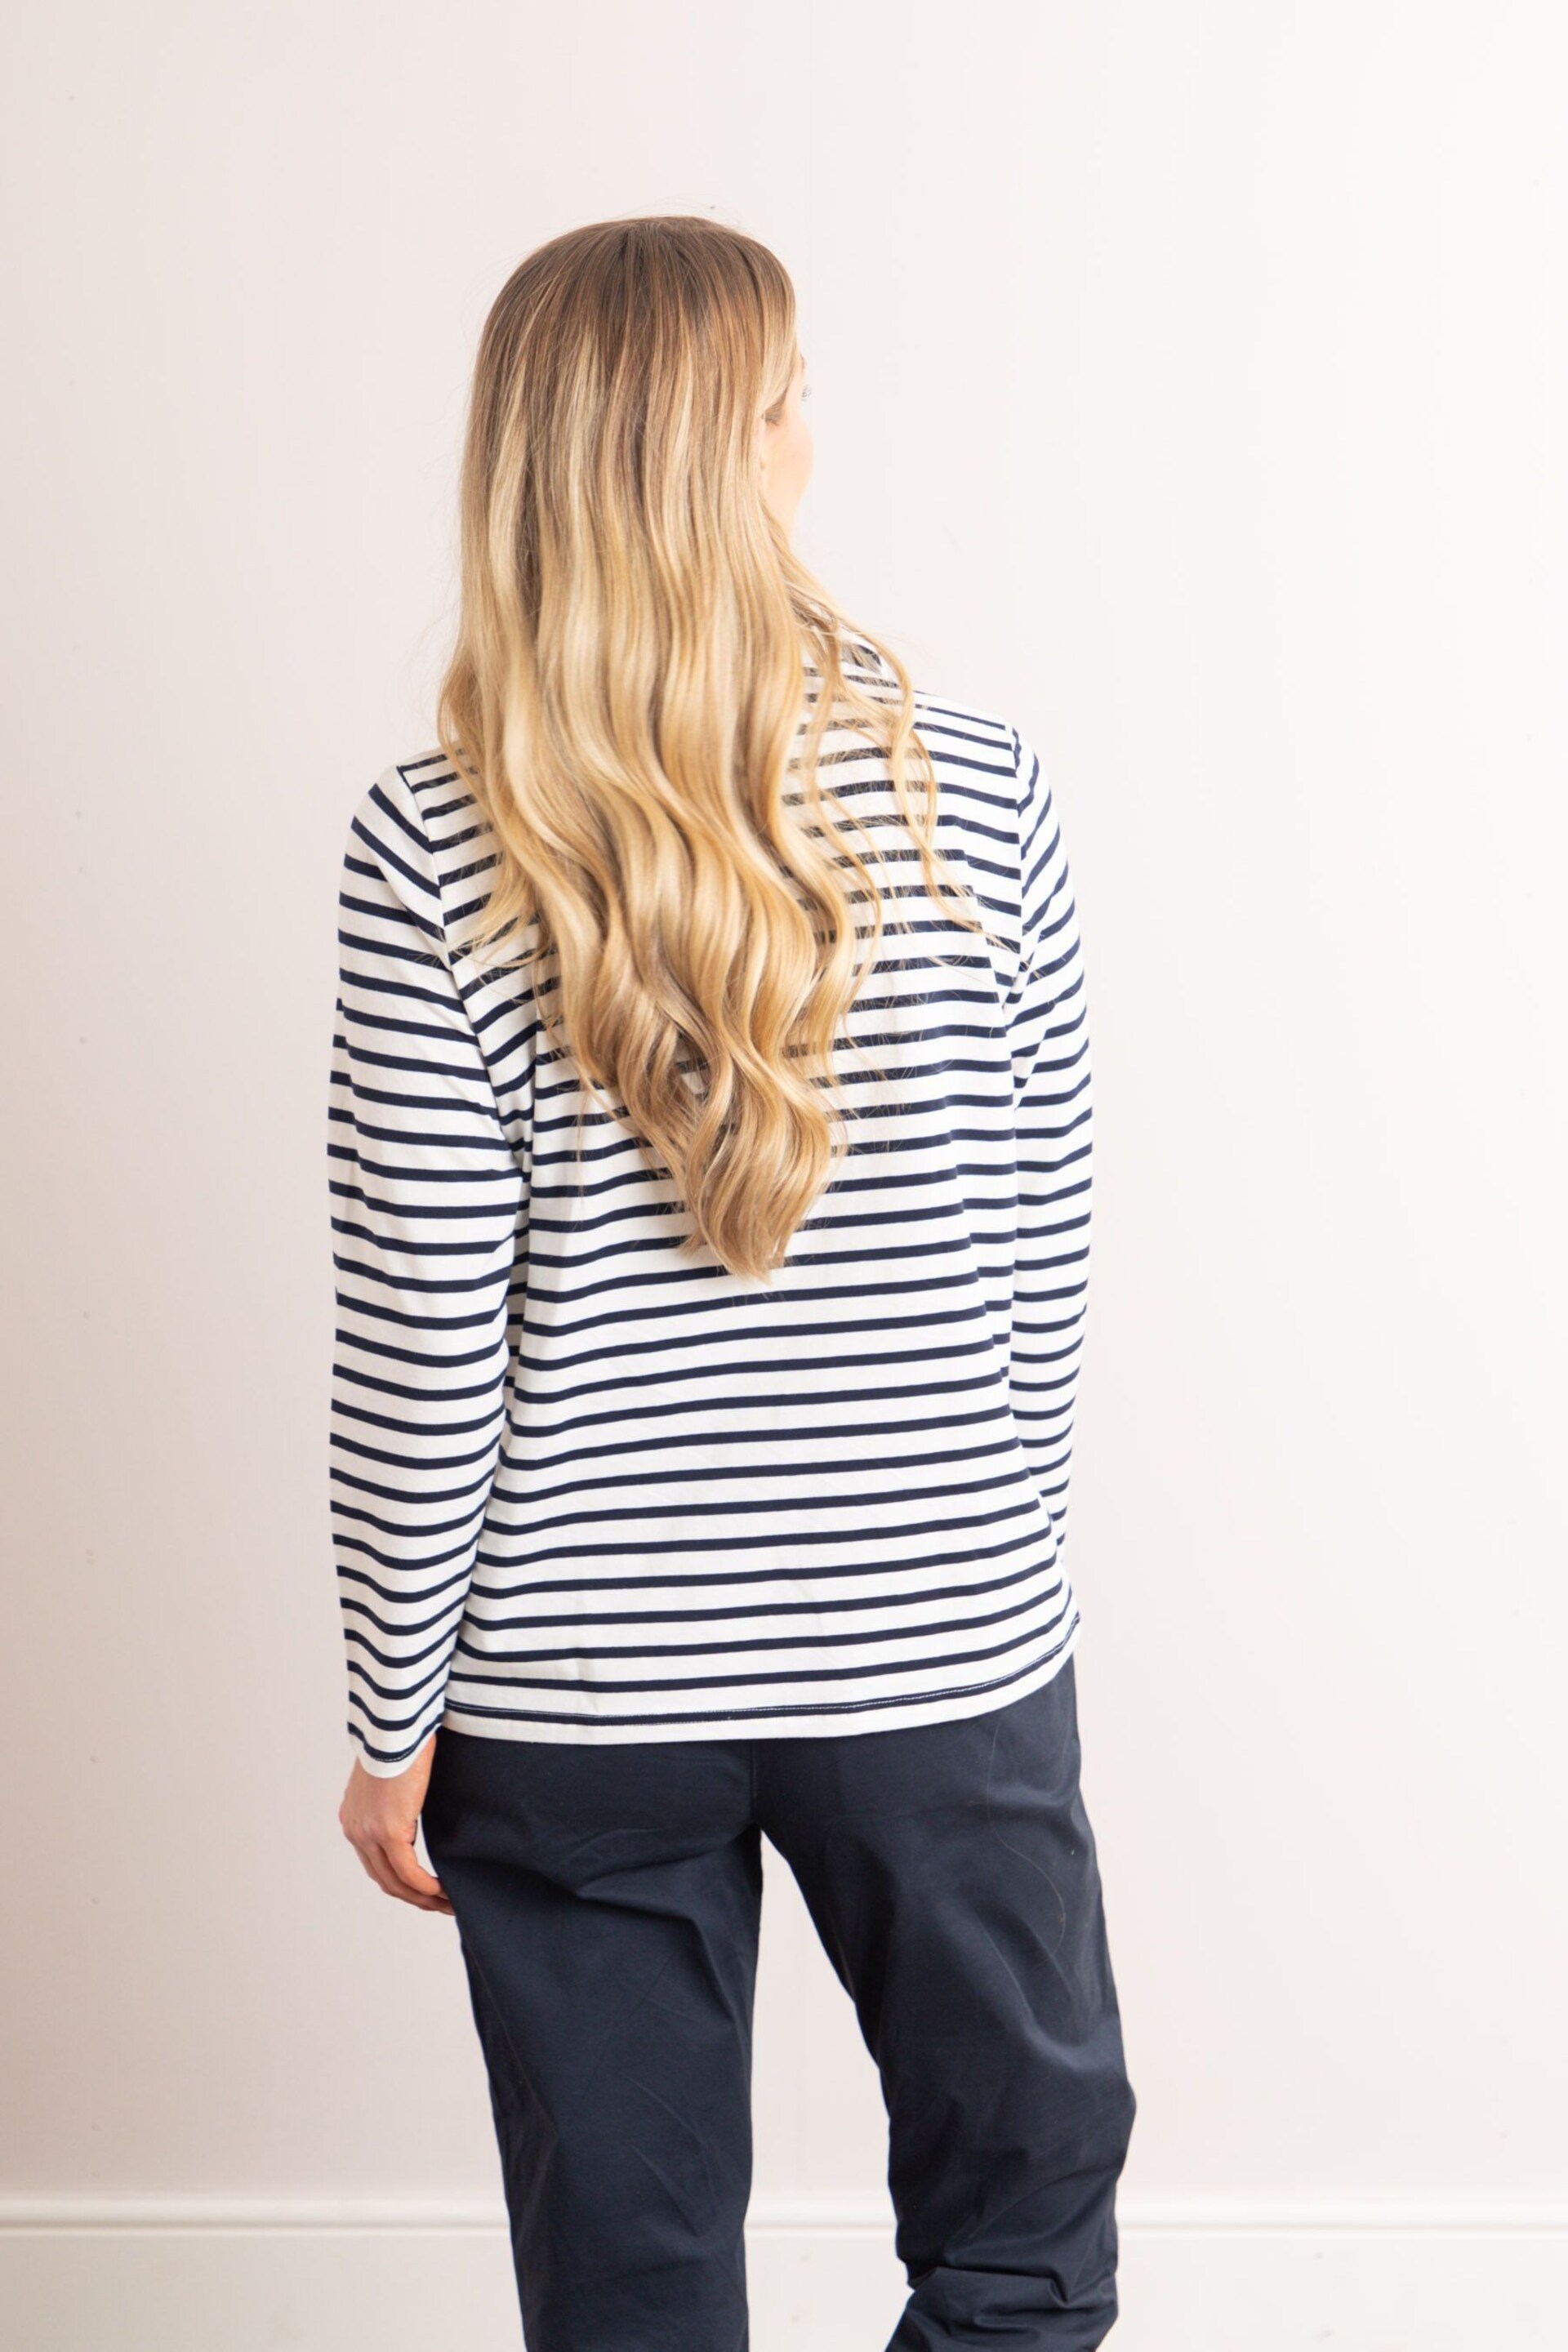 Lakeland Clothing Daisy V-Neck Collared Stripe White Jersey Top - Image 2 of 6